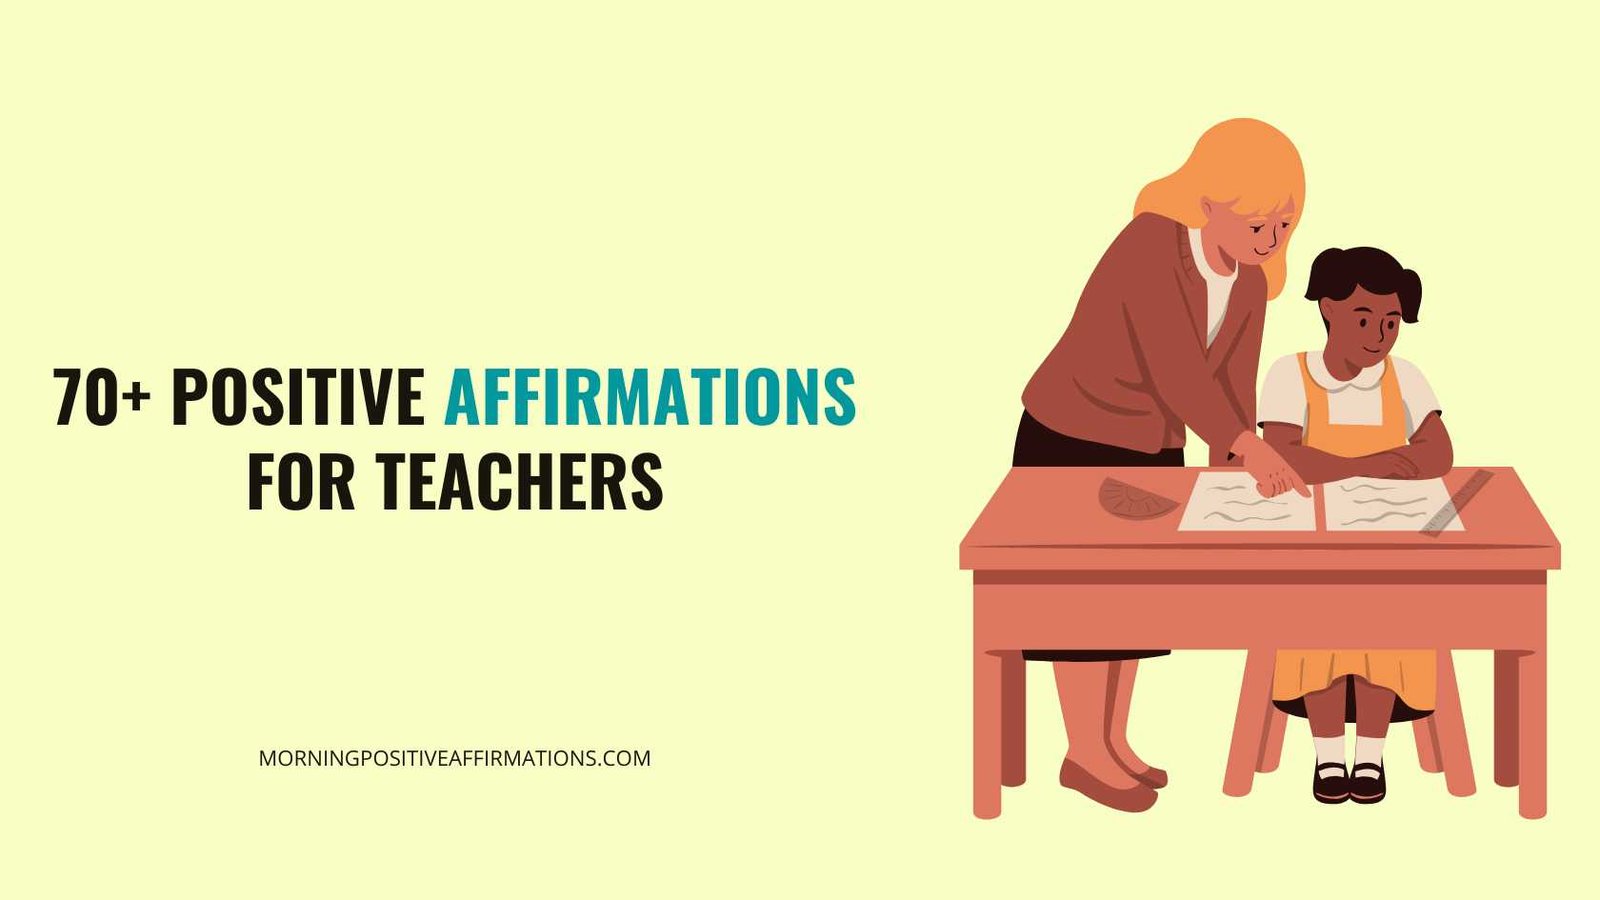 Affirmations for teachers